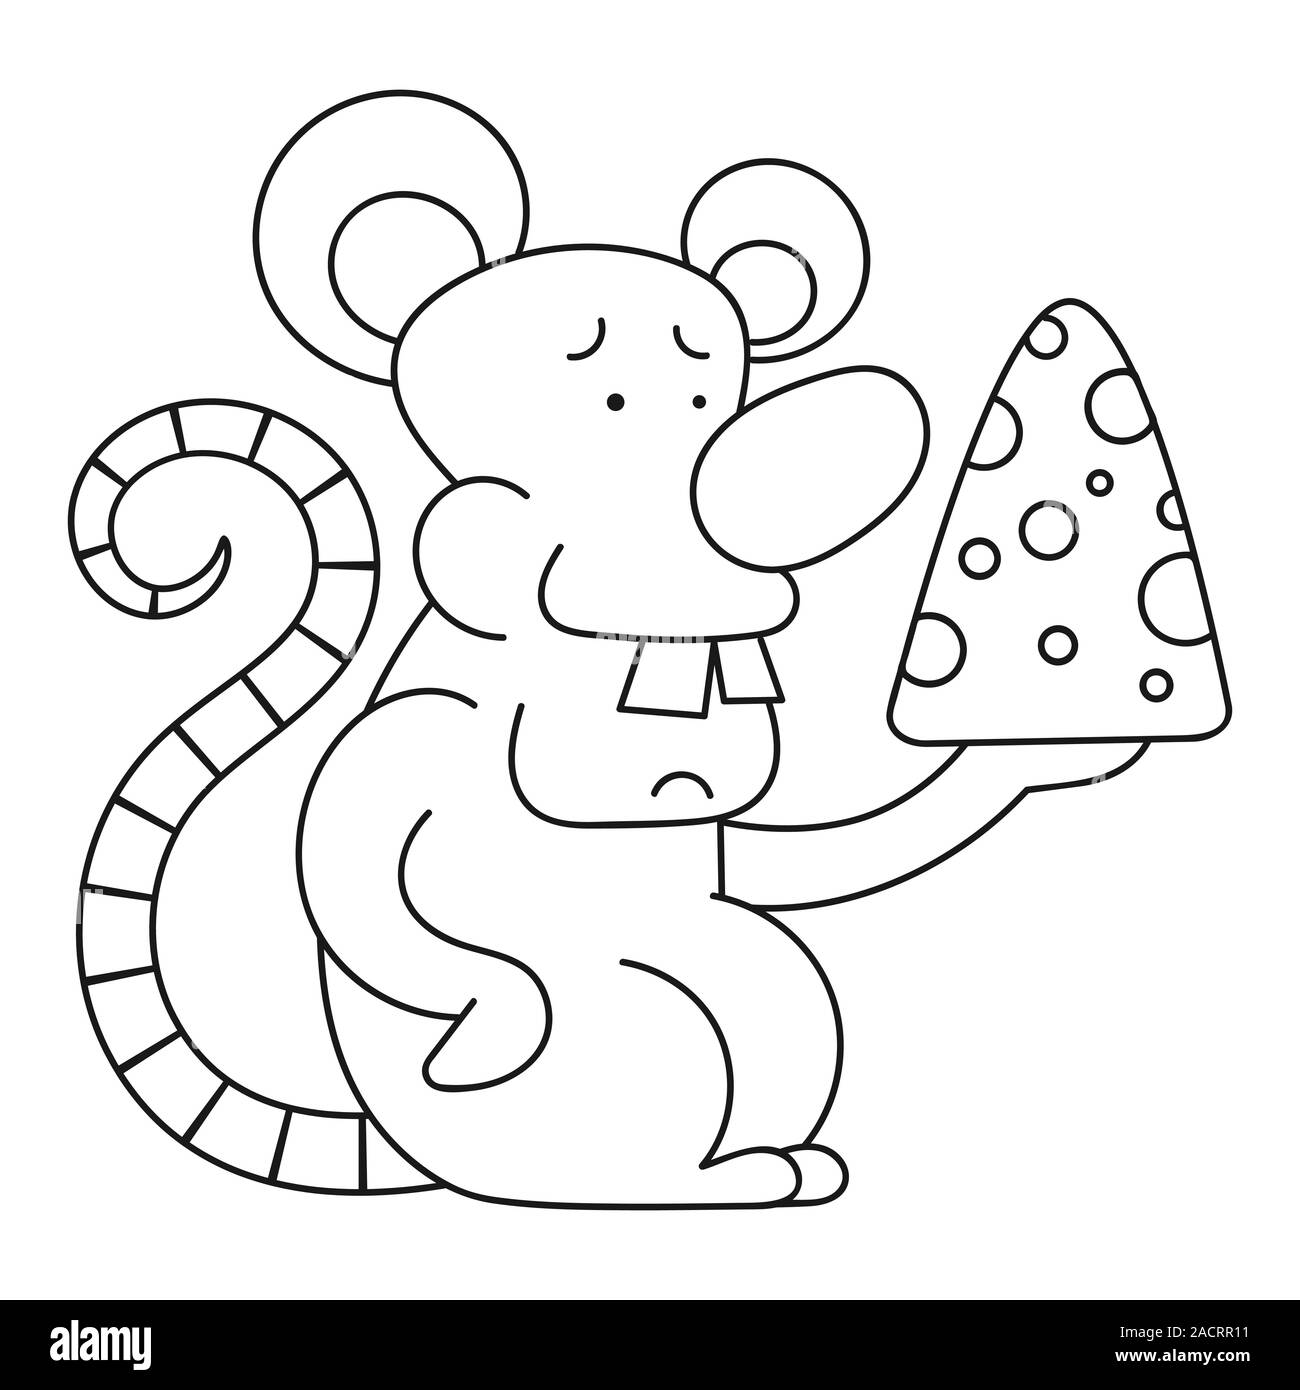 Download Illustration Cartoon Rat Coloring Book For Kids Stock Vector Image Art Alamy